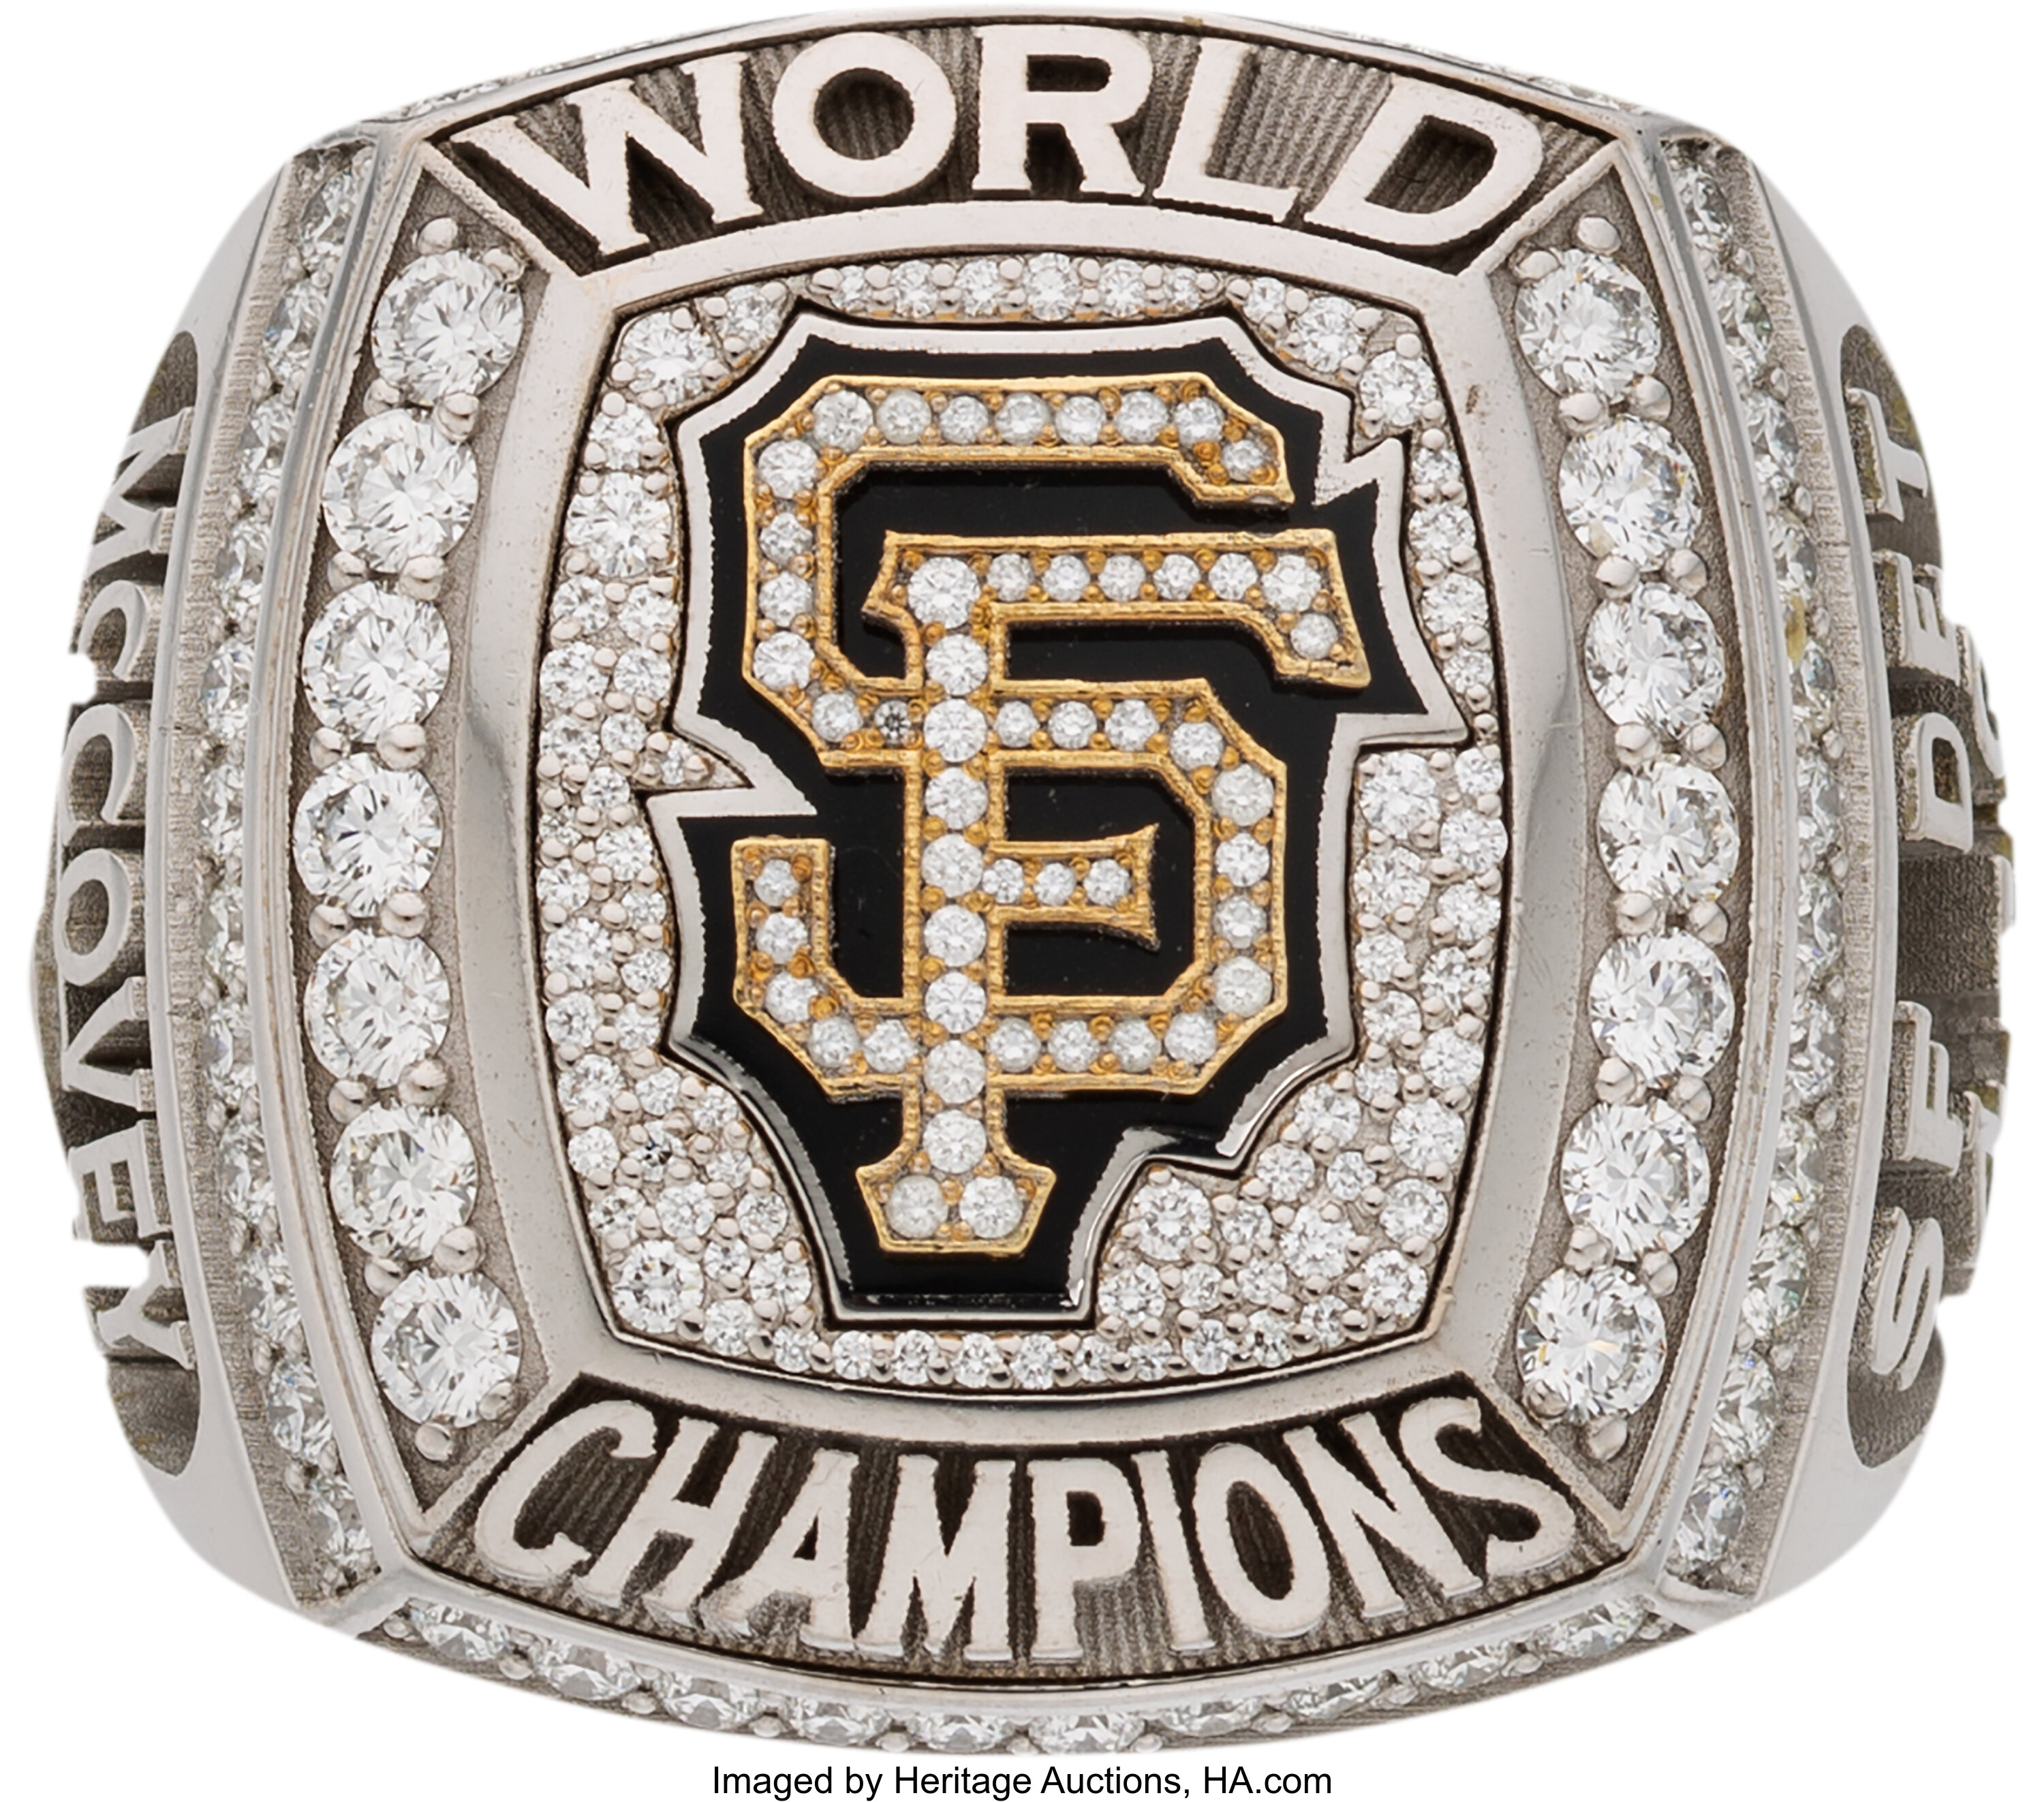 World Series champion Giants receive rings - The San Diego Union-Tribune